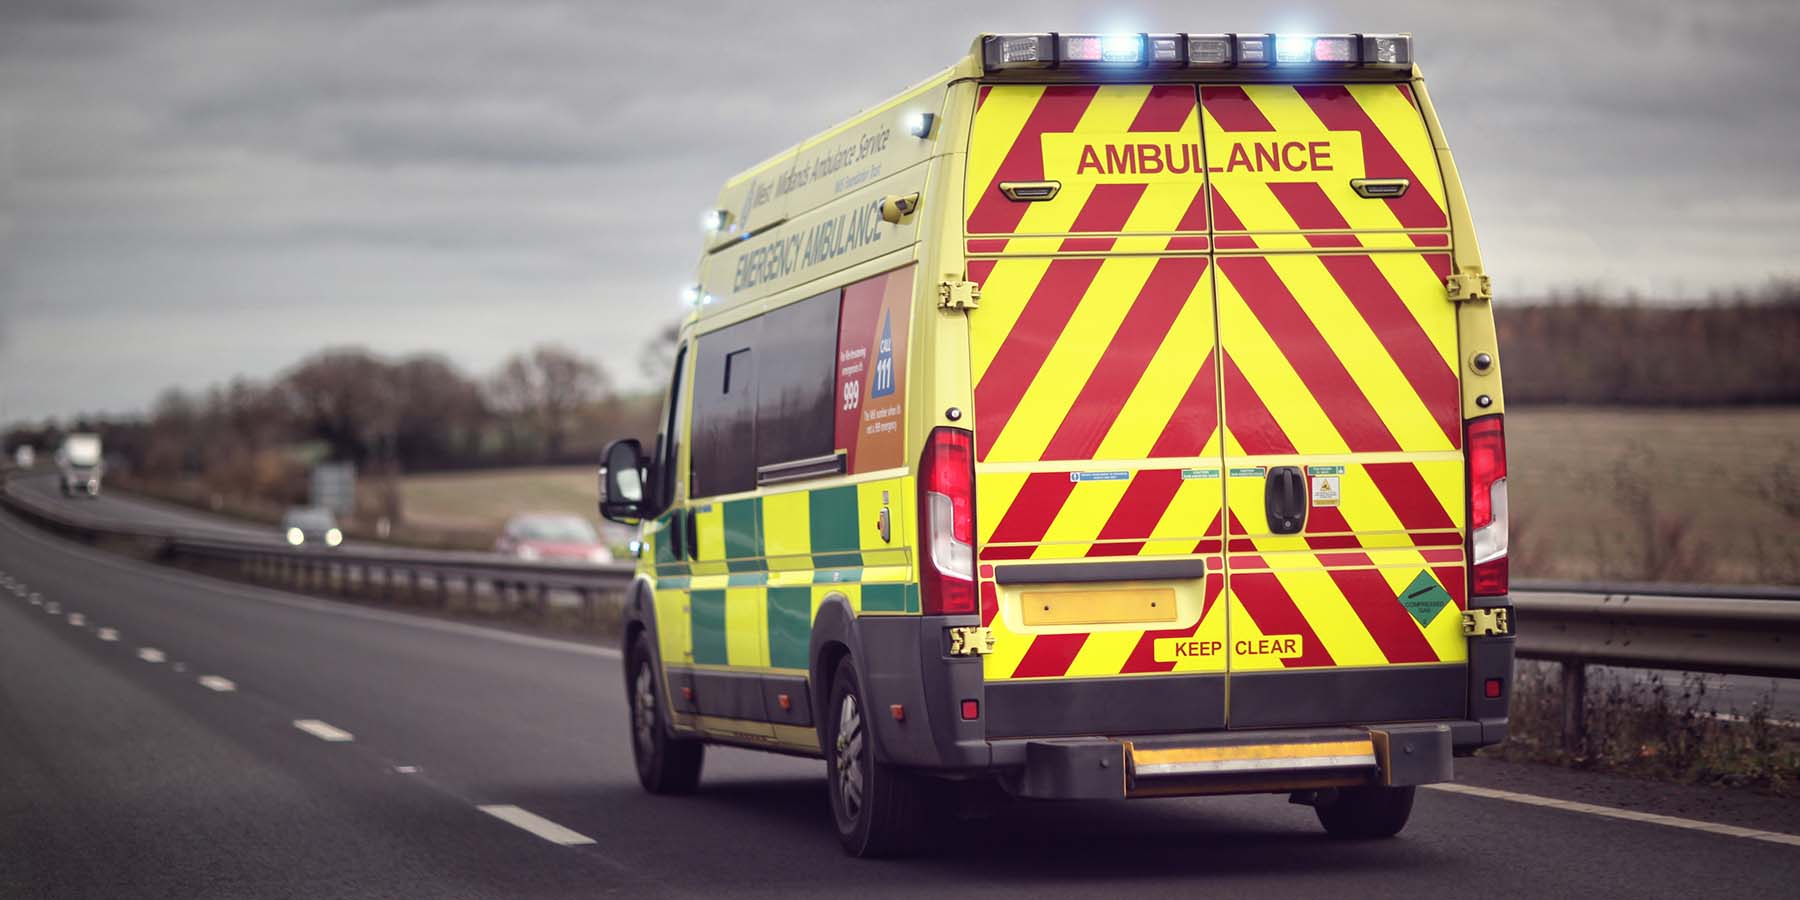 NHS Ambulance responding to medical emergency